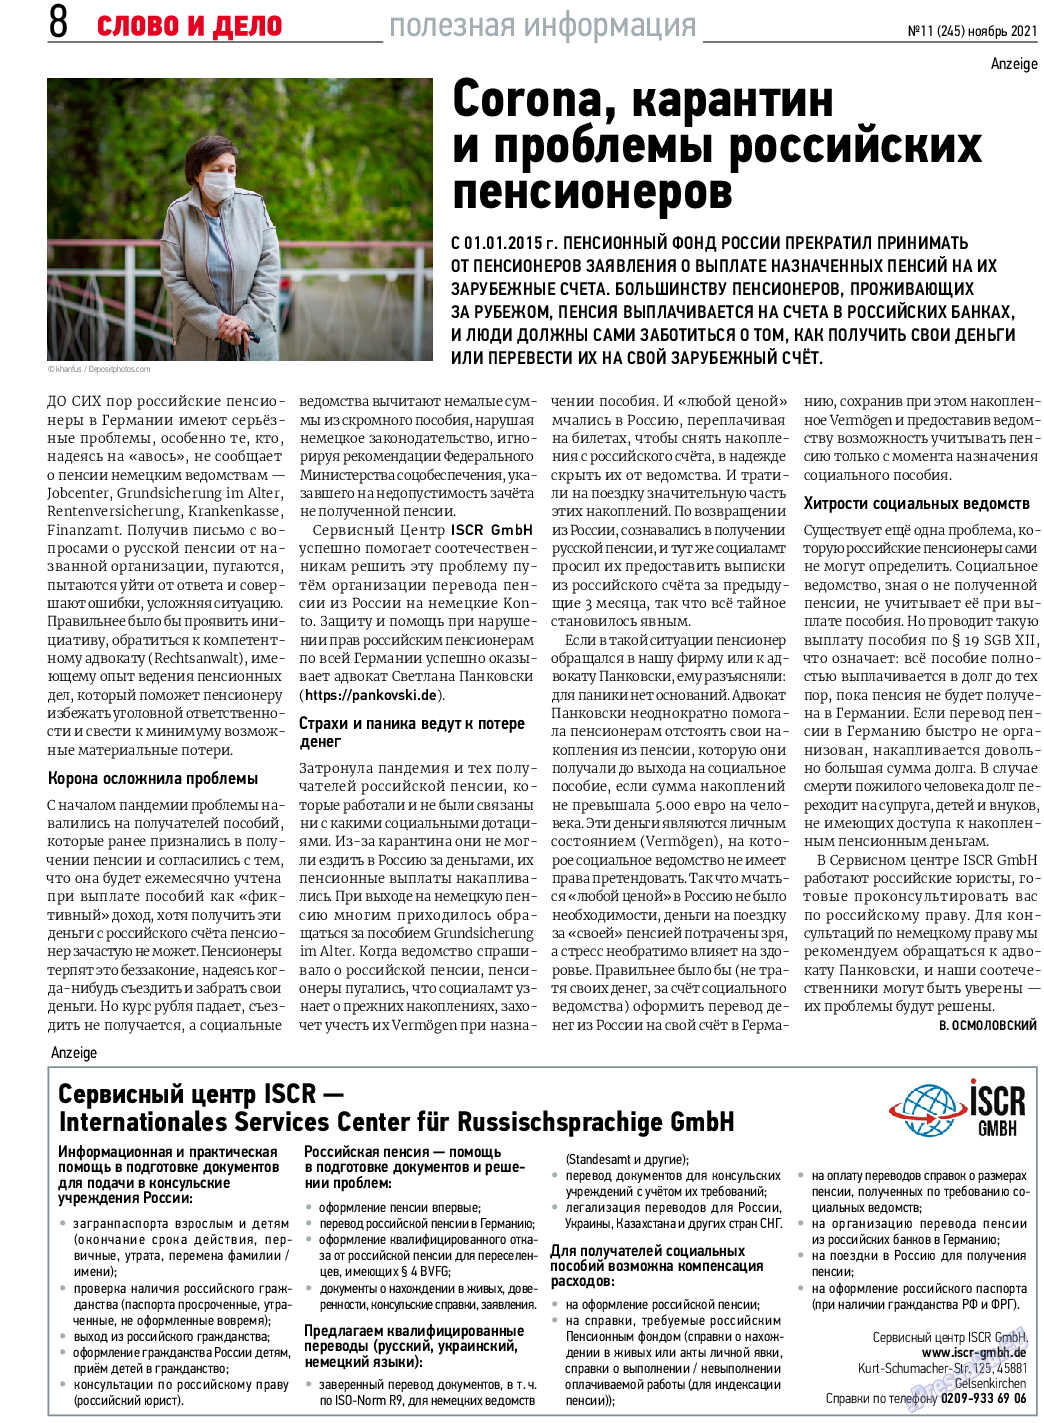 Телеграф NRW, газета. 2021 №11 стр.8